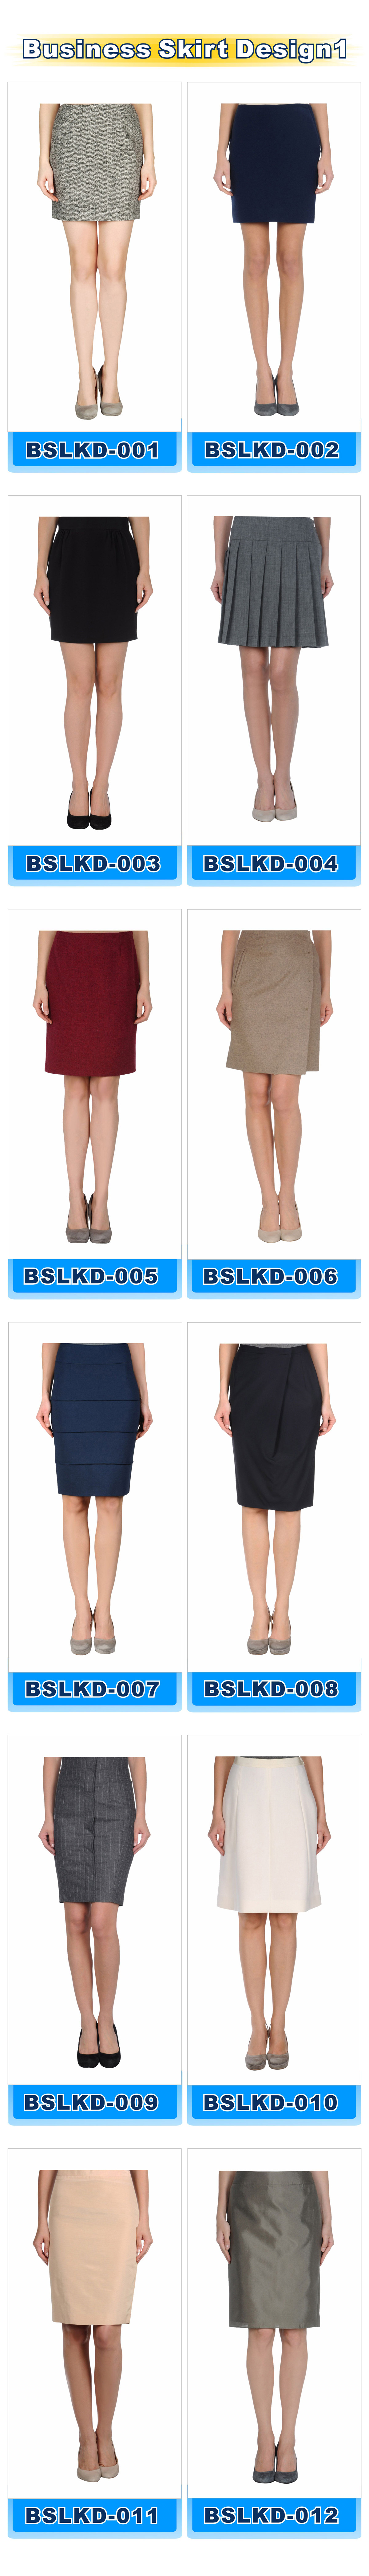 Business Skirt Design1